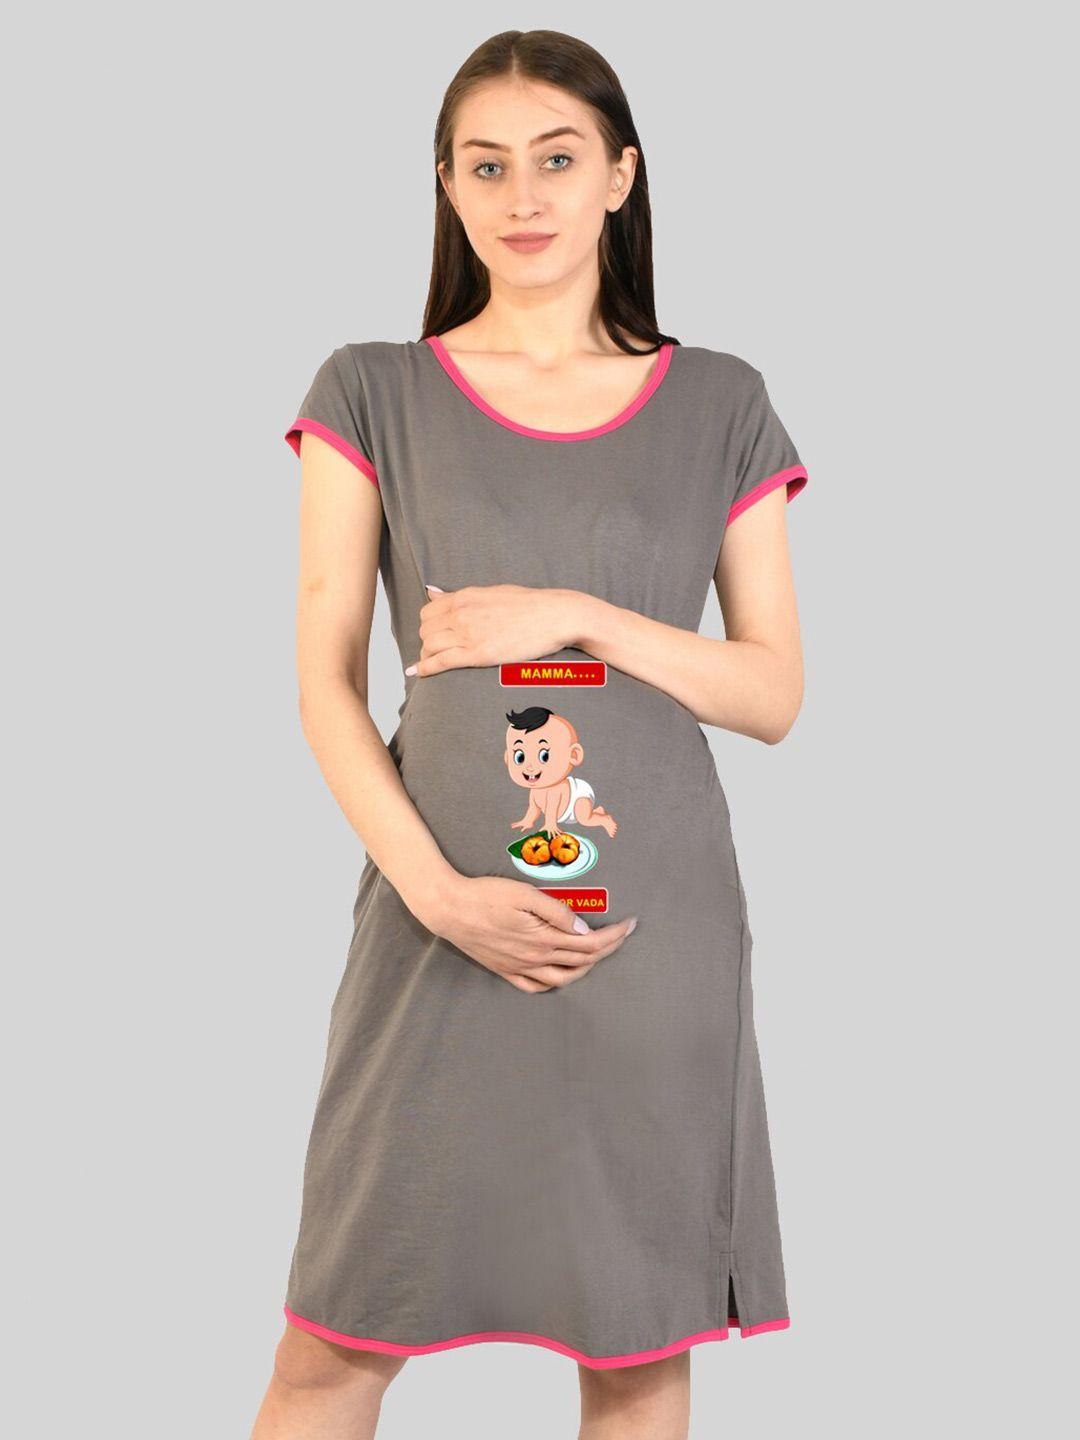 sillyboom graphic printed t-shirt maternity nightdress